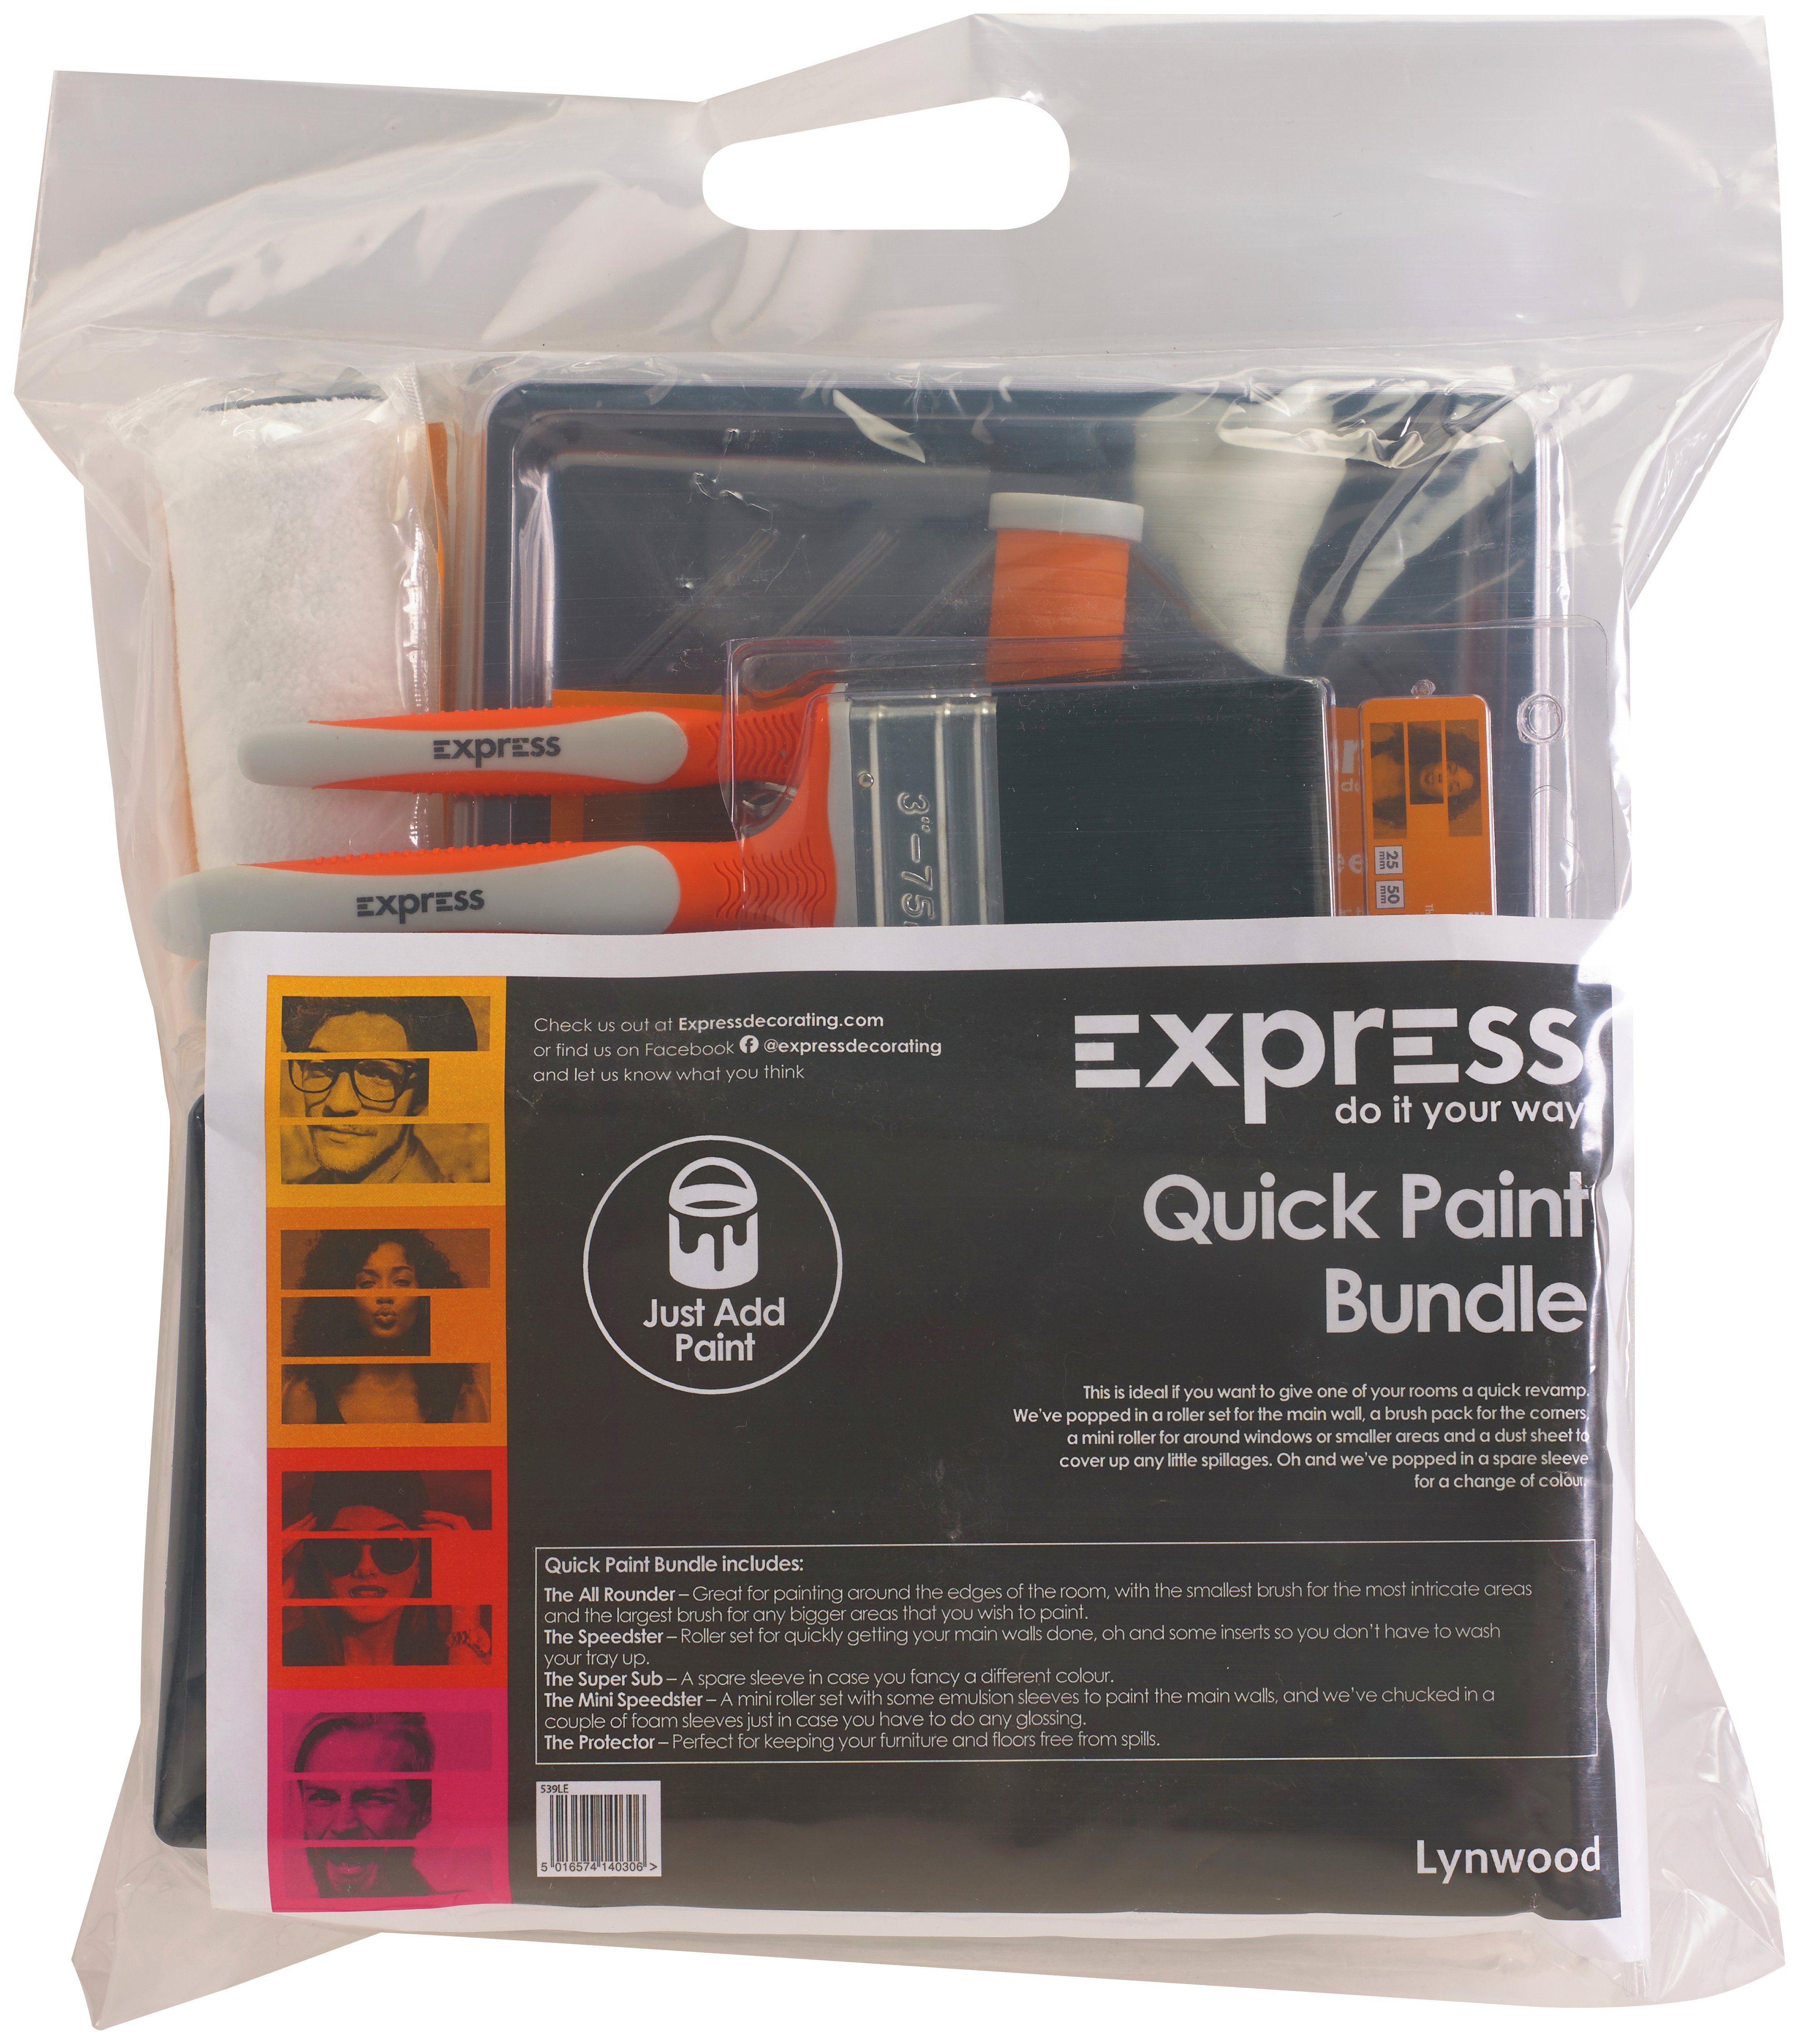 Express Lynwood Quick Paint Kit.